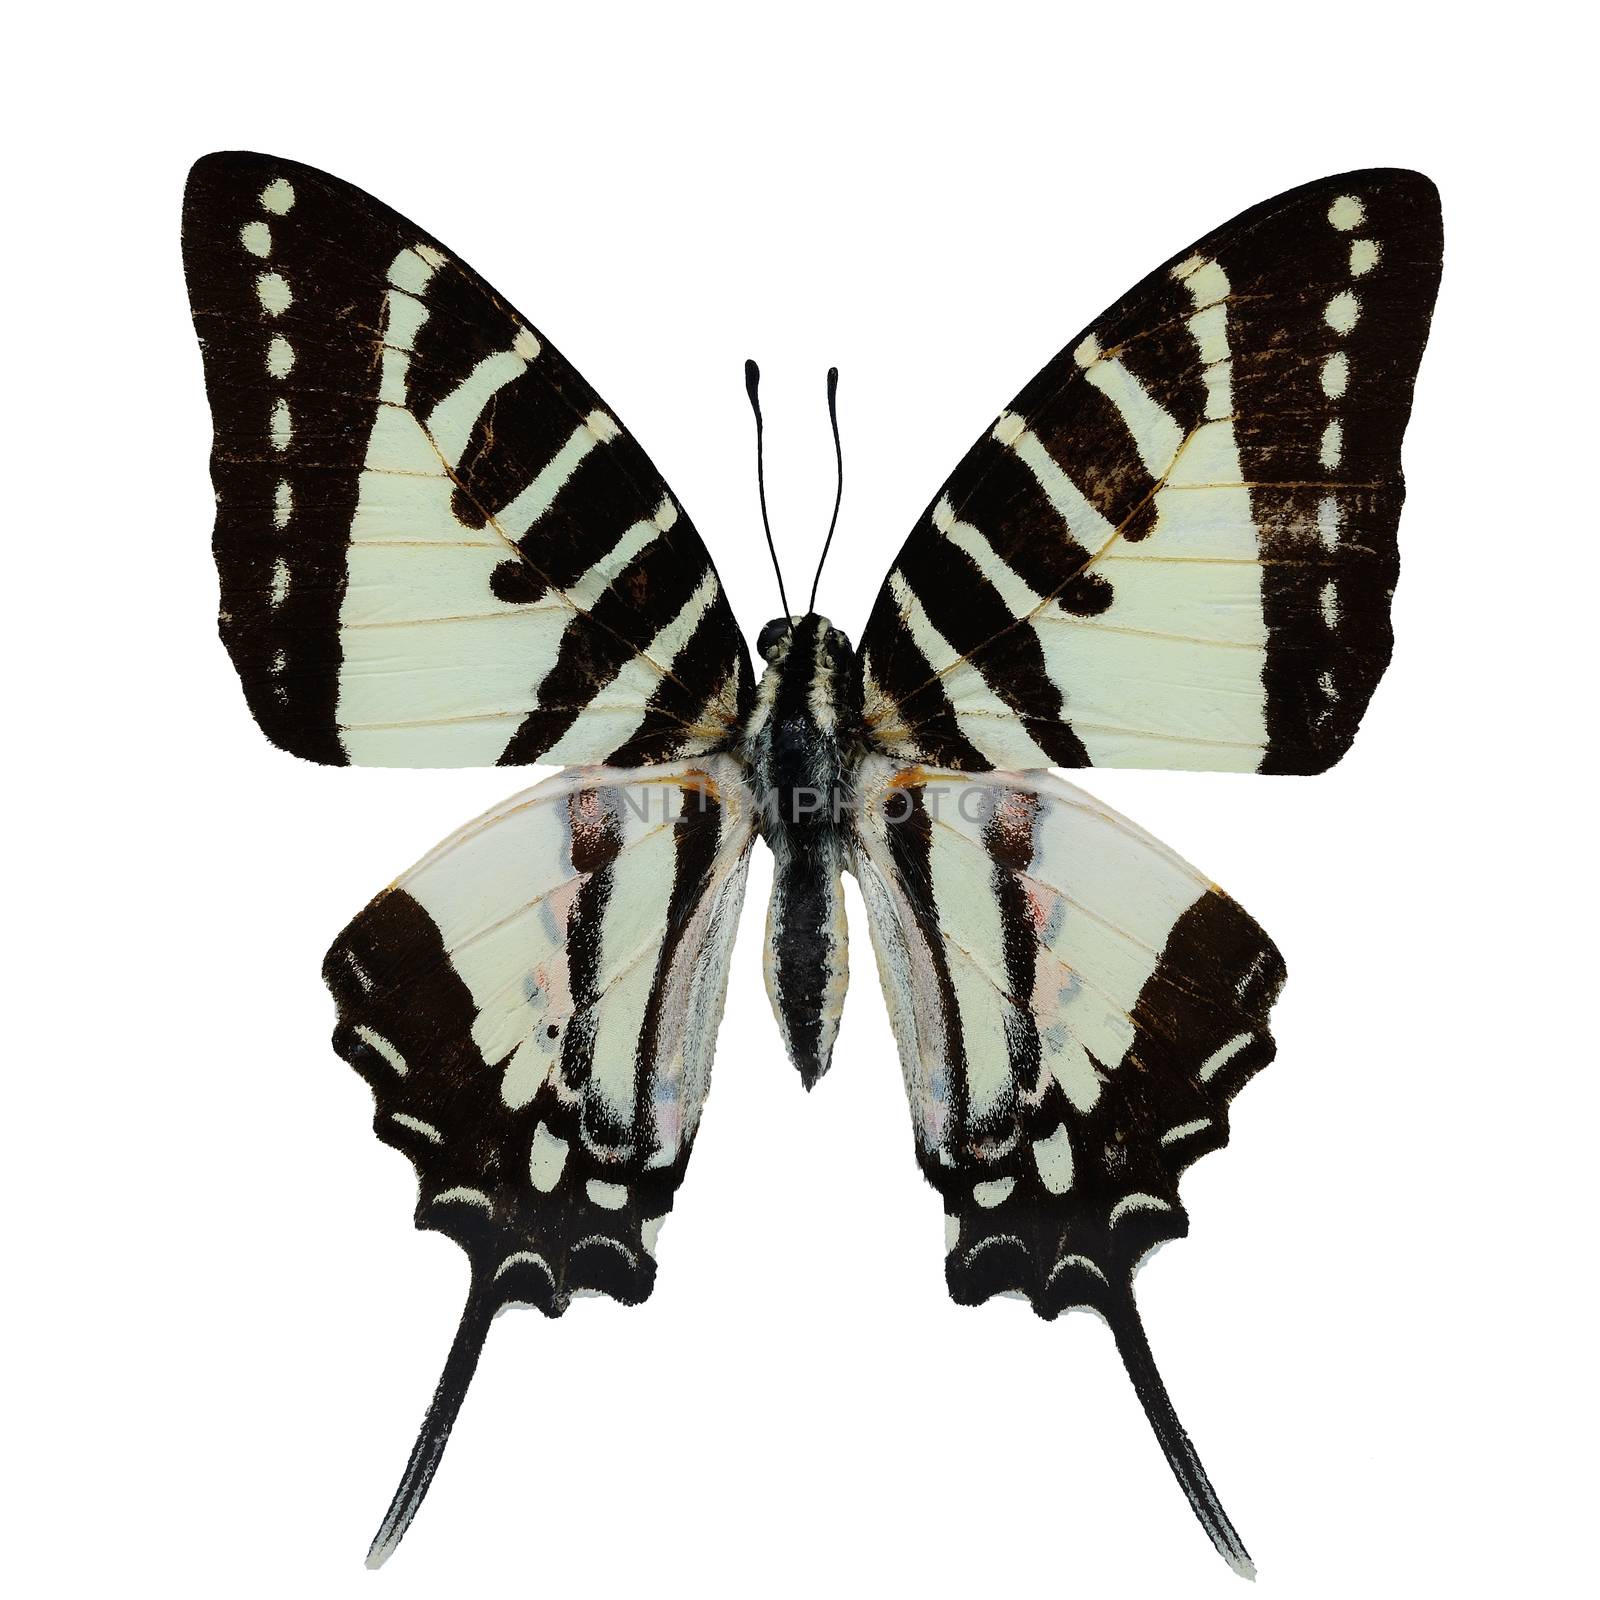 Spot Swordtail butterfly by panuruangjan